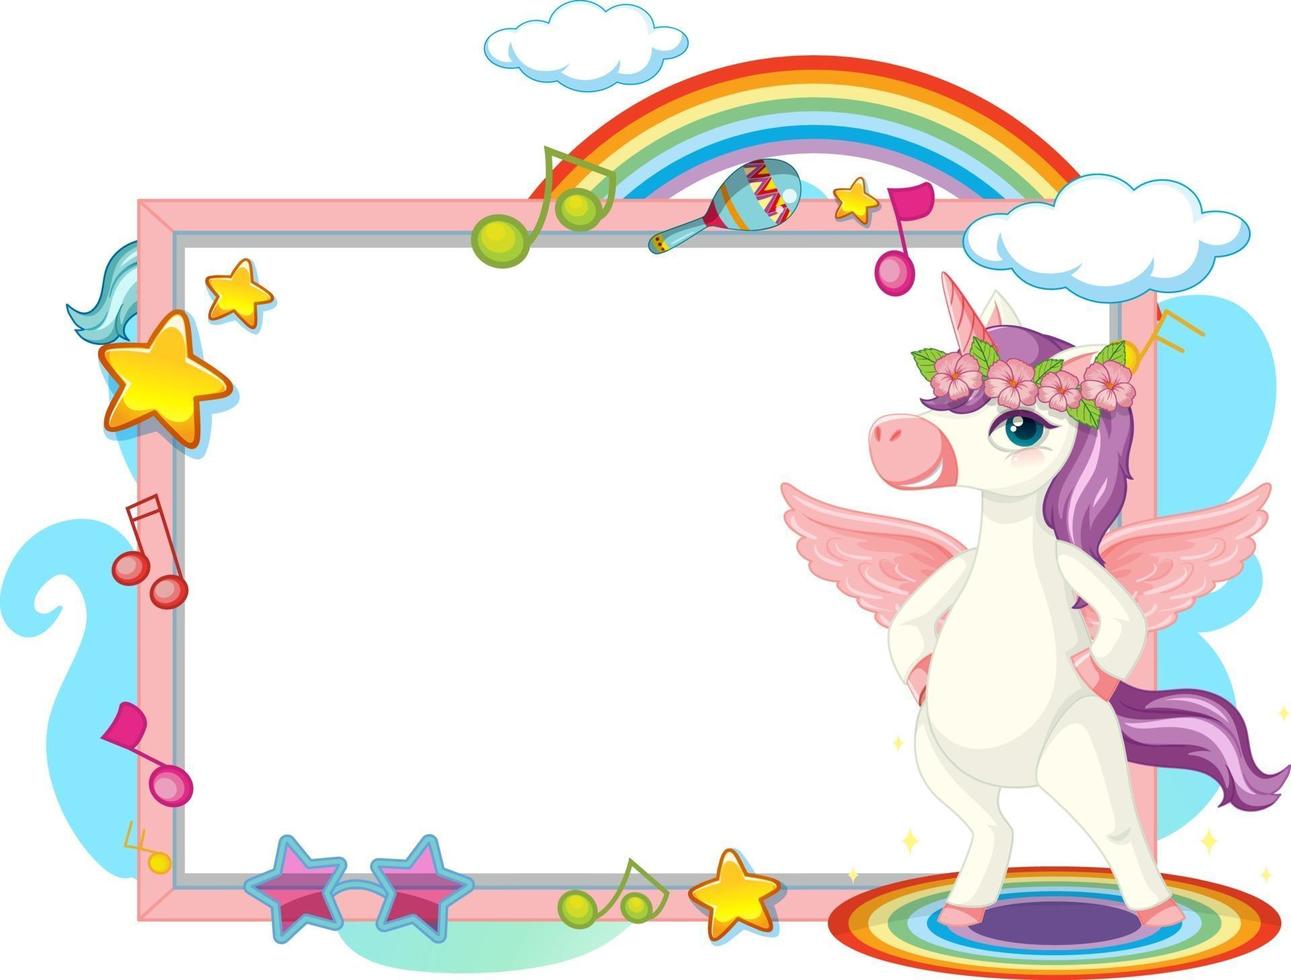 Cute unicorn cartoon character with blank banner vector